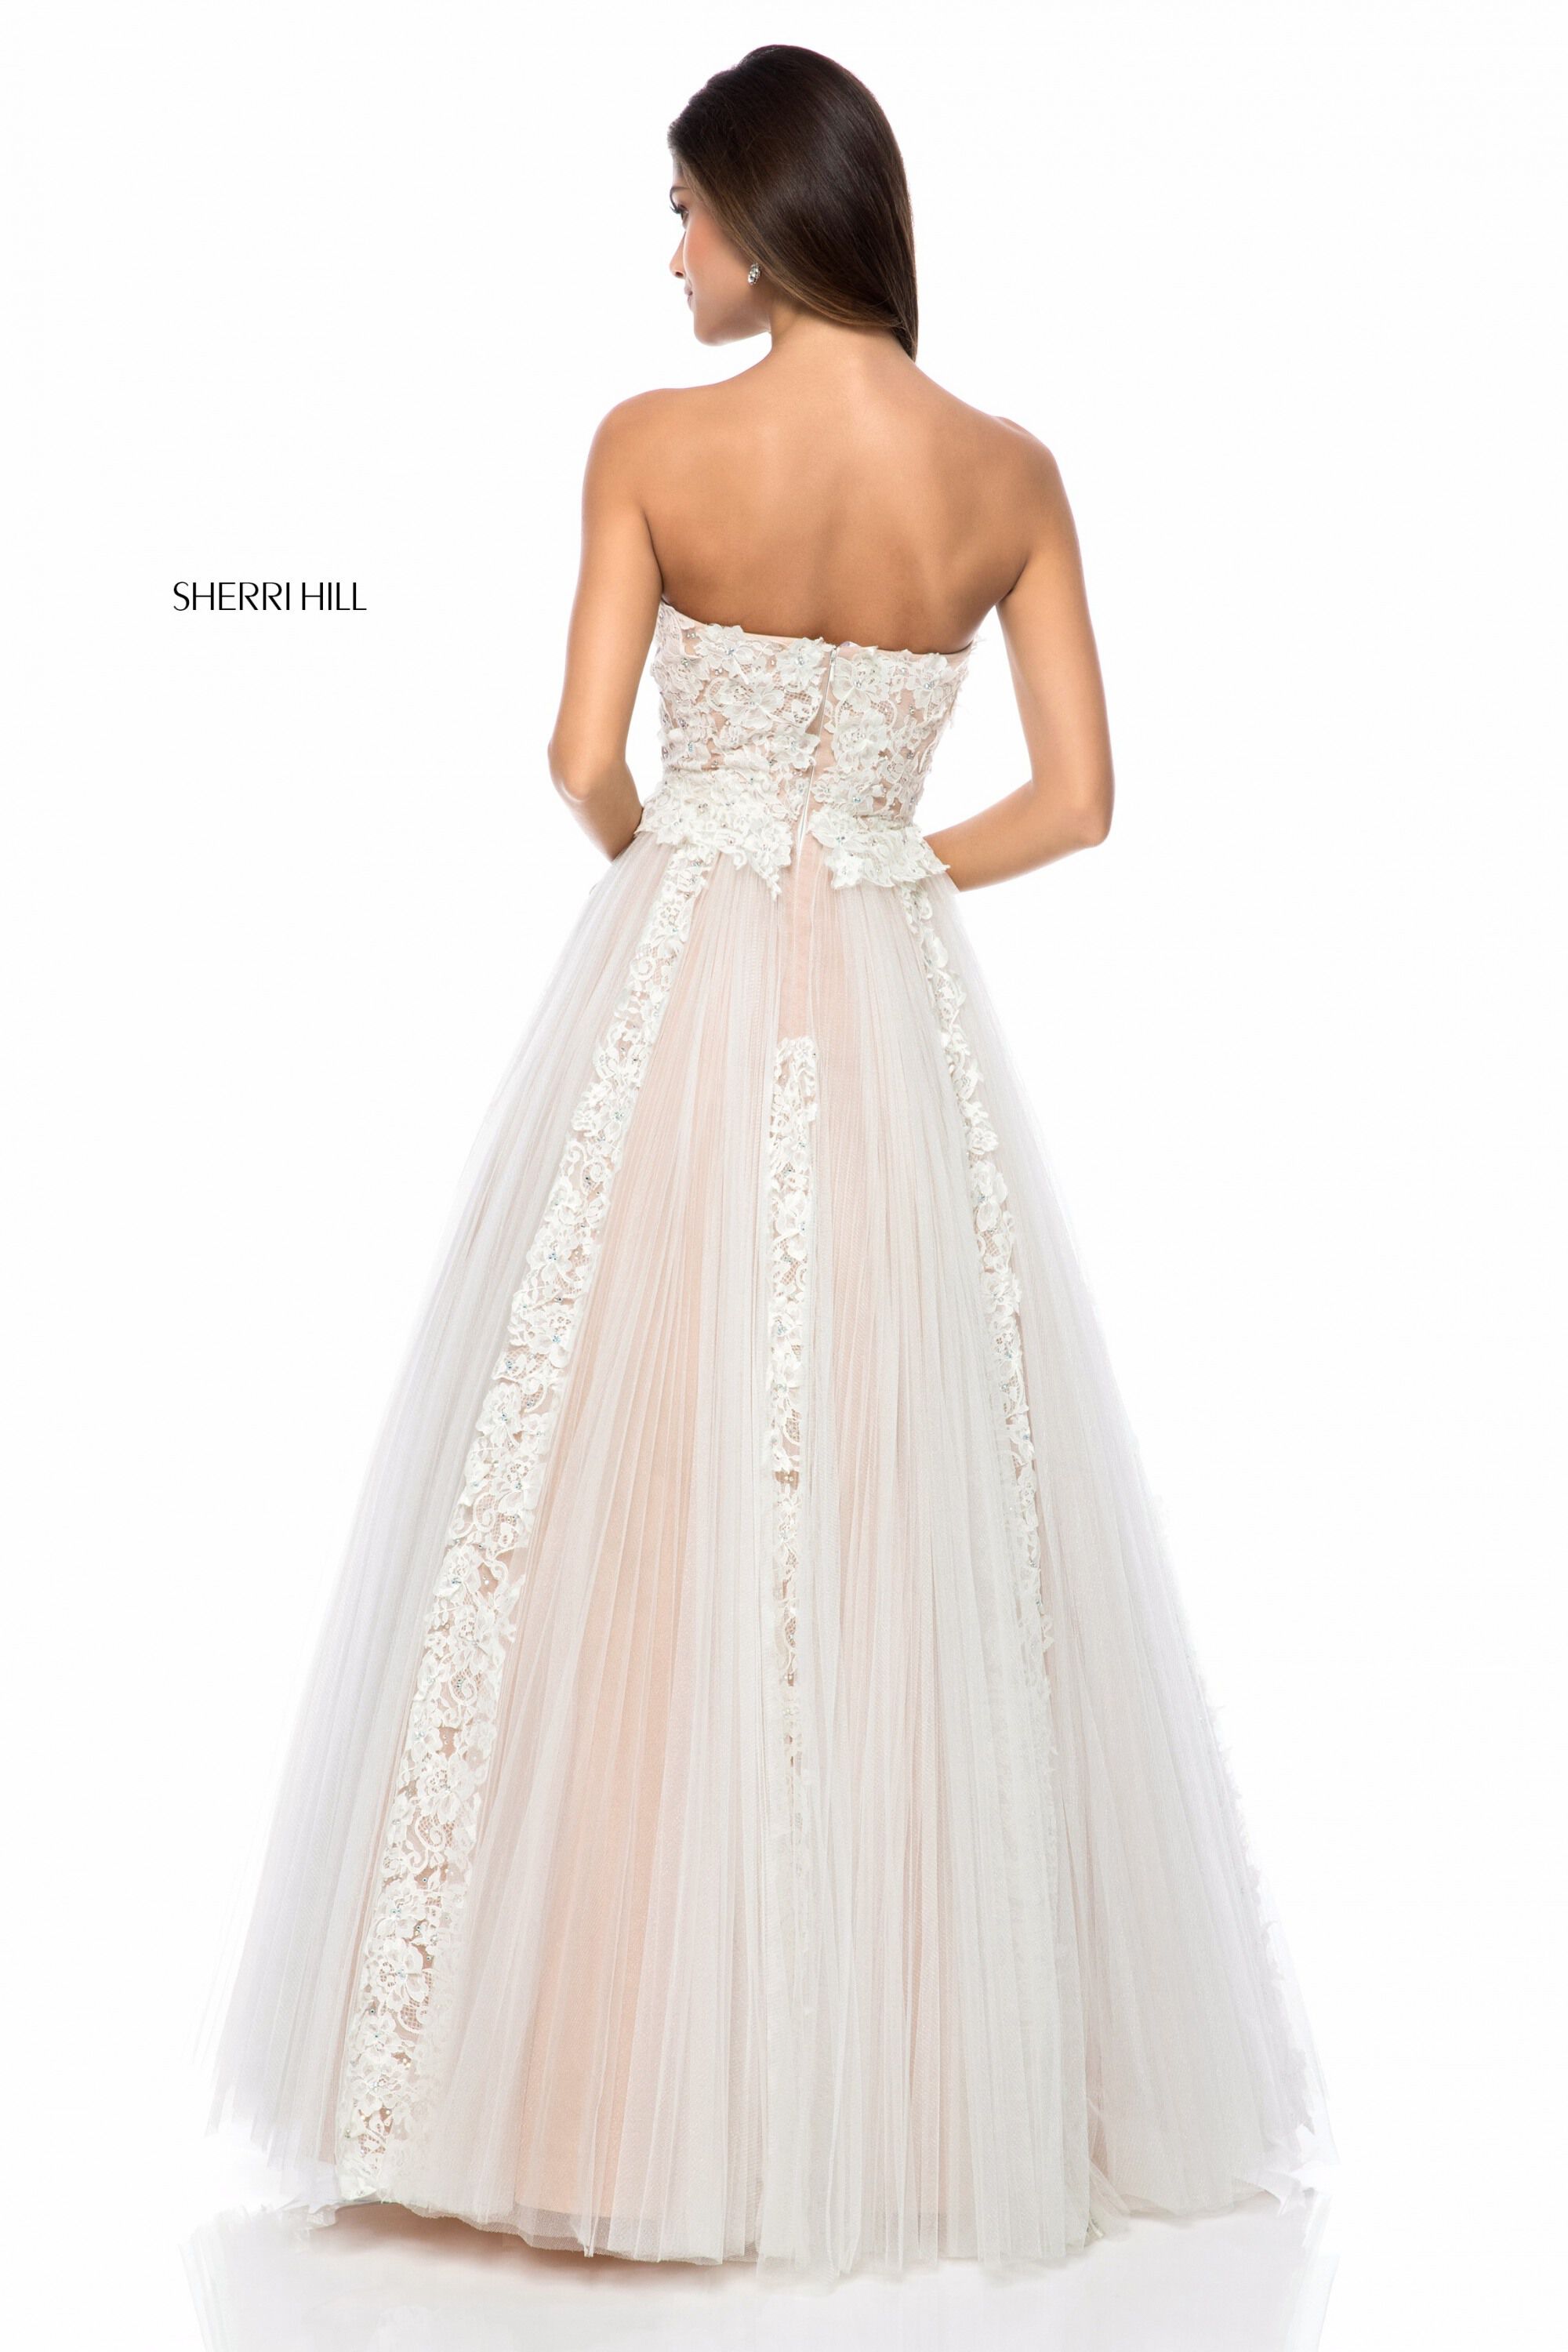 Buy dress style № 52053 designed by SherriHill